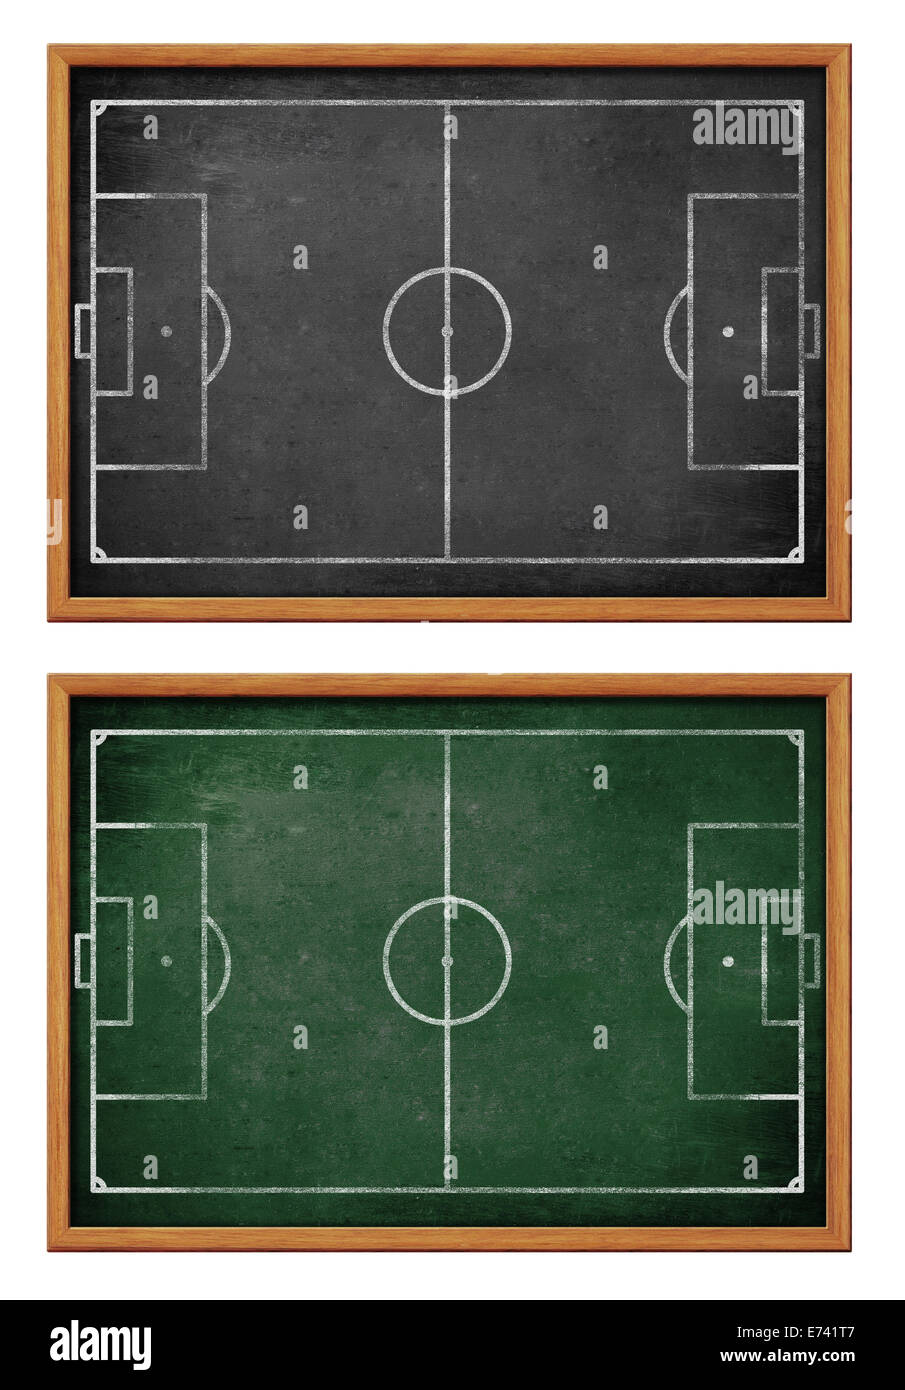 Blackboards for soccer team formation. Football field or pitch plan on blackboard. Stock Photo